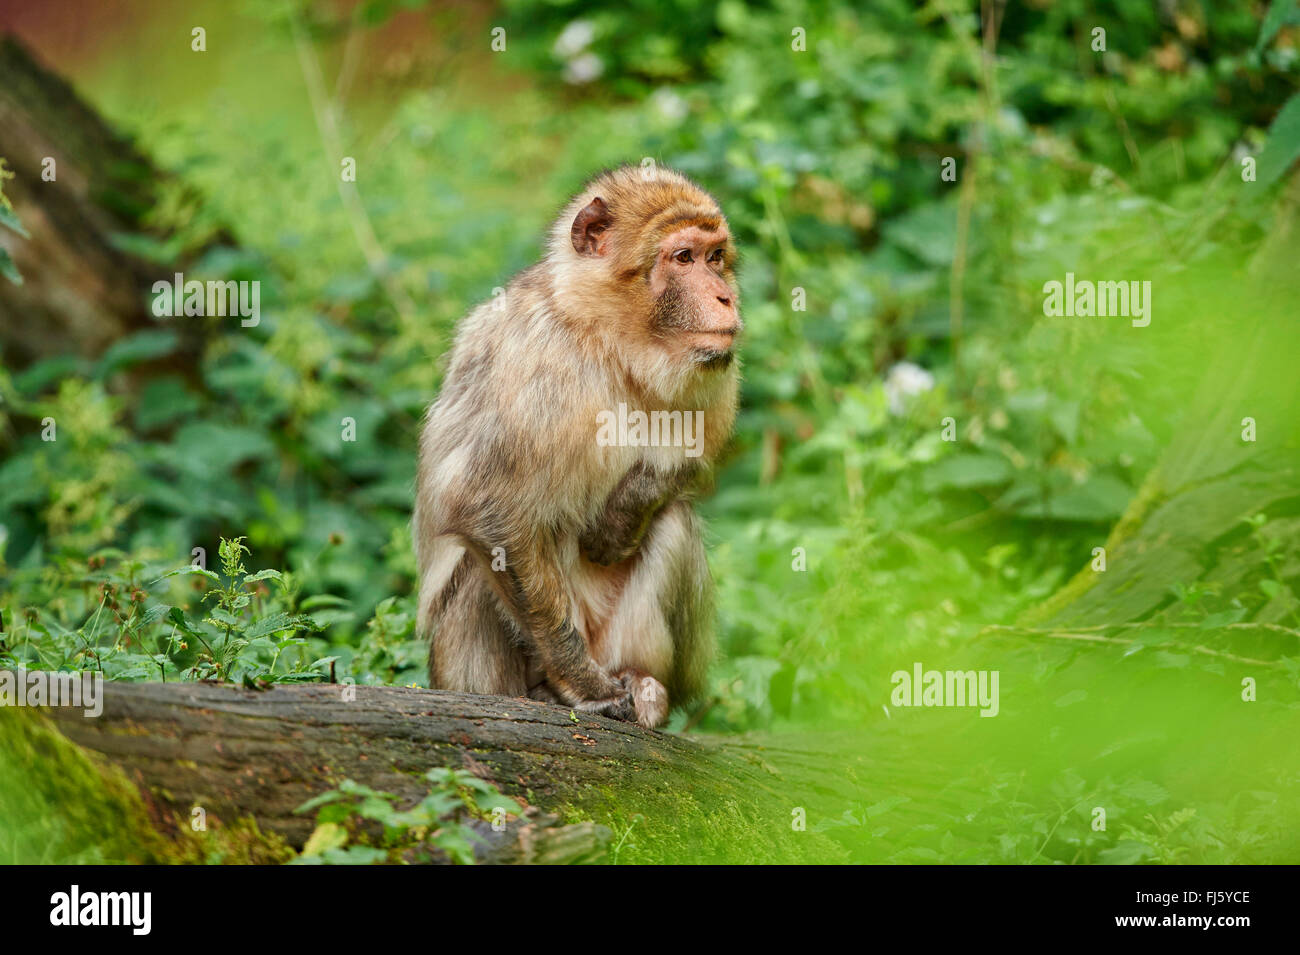 Singes de barbarie, barbary macaque (Macaca sylvanus), reposant sur une branche Banque D'Images